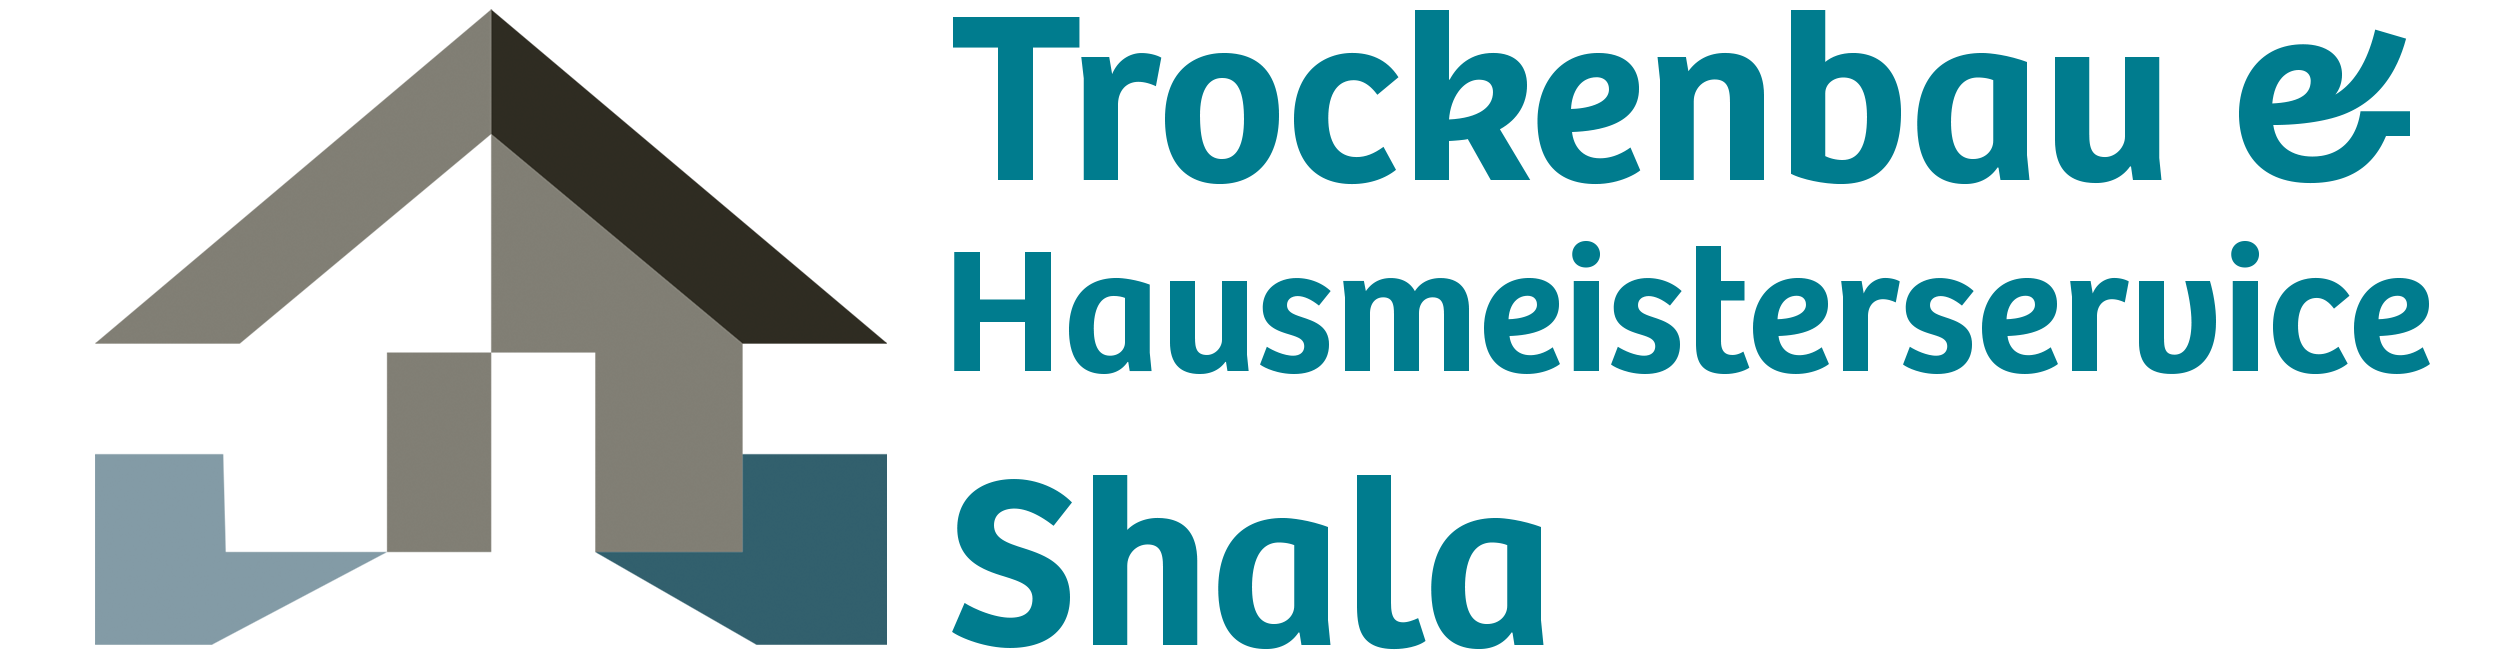 Trockenbau & Hausmeisterservice Shala